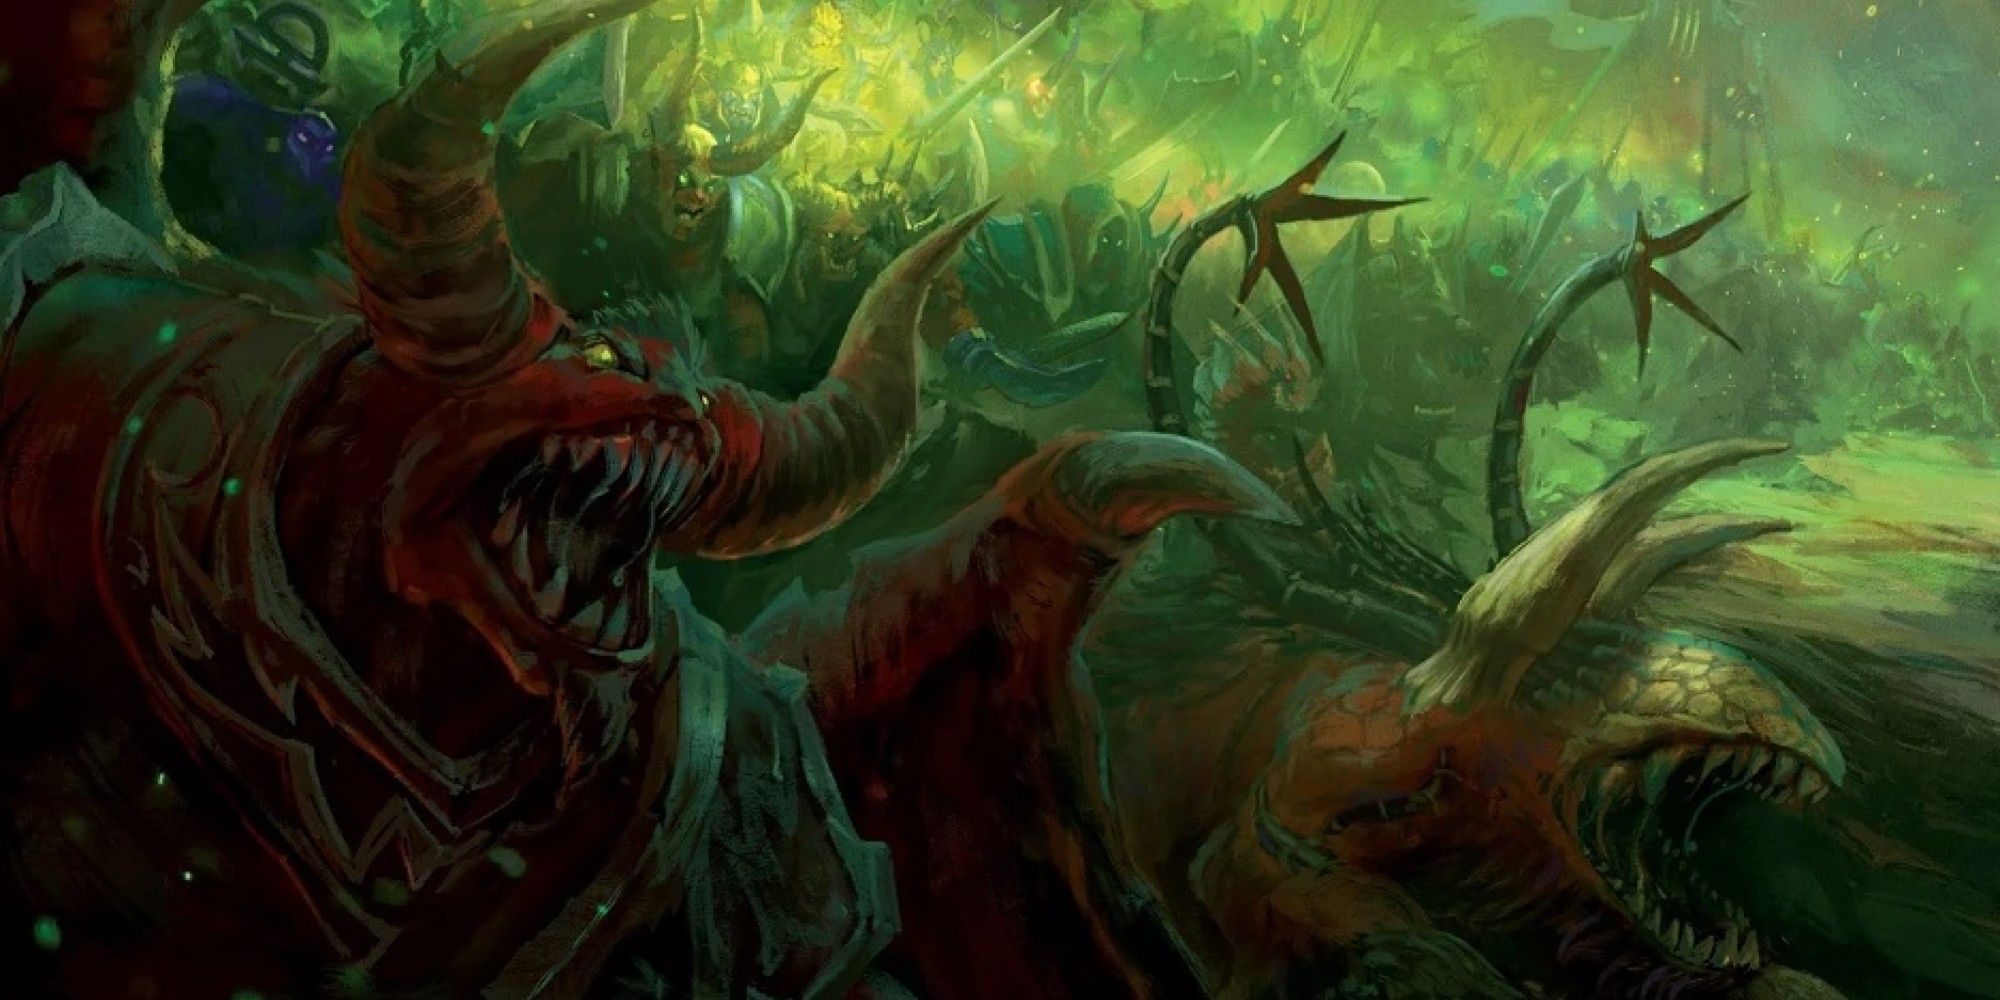 World of Warcraft image showing the demonic forces of the burning legion